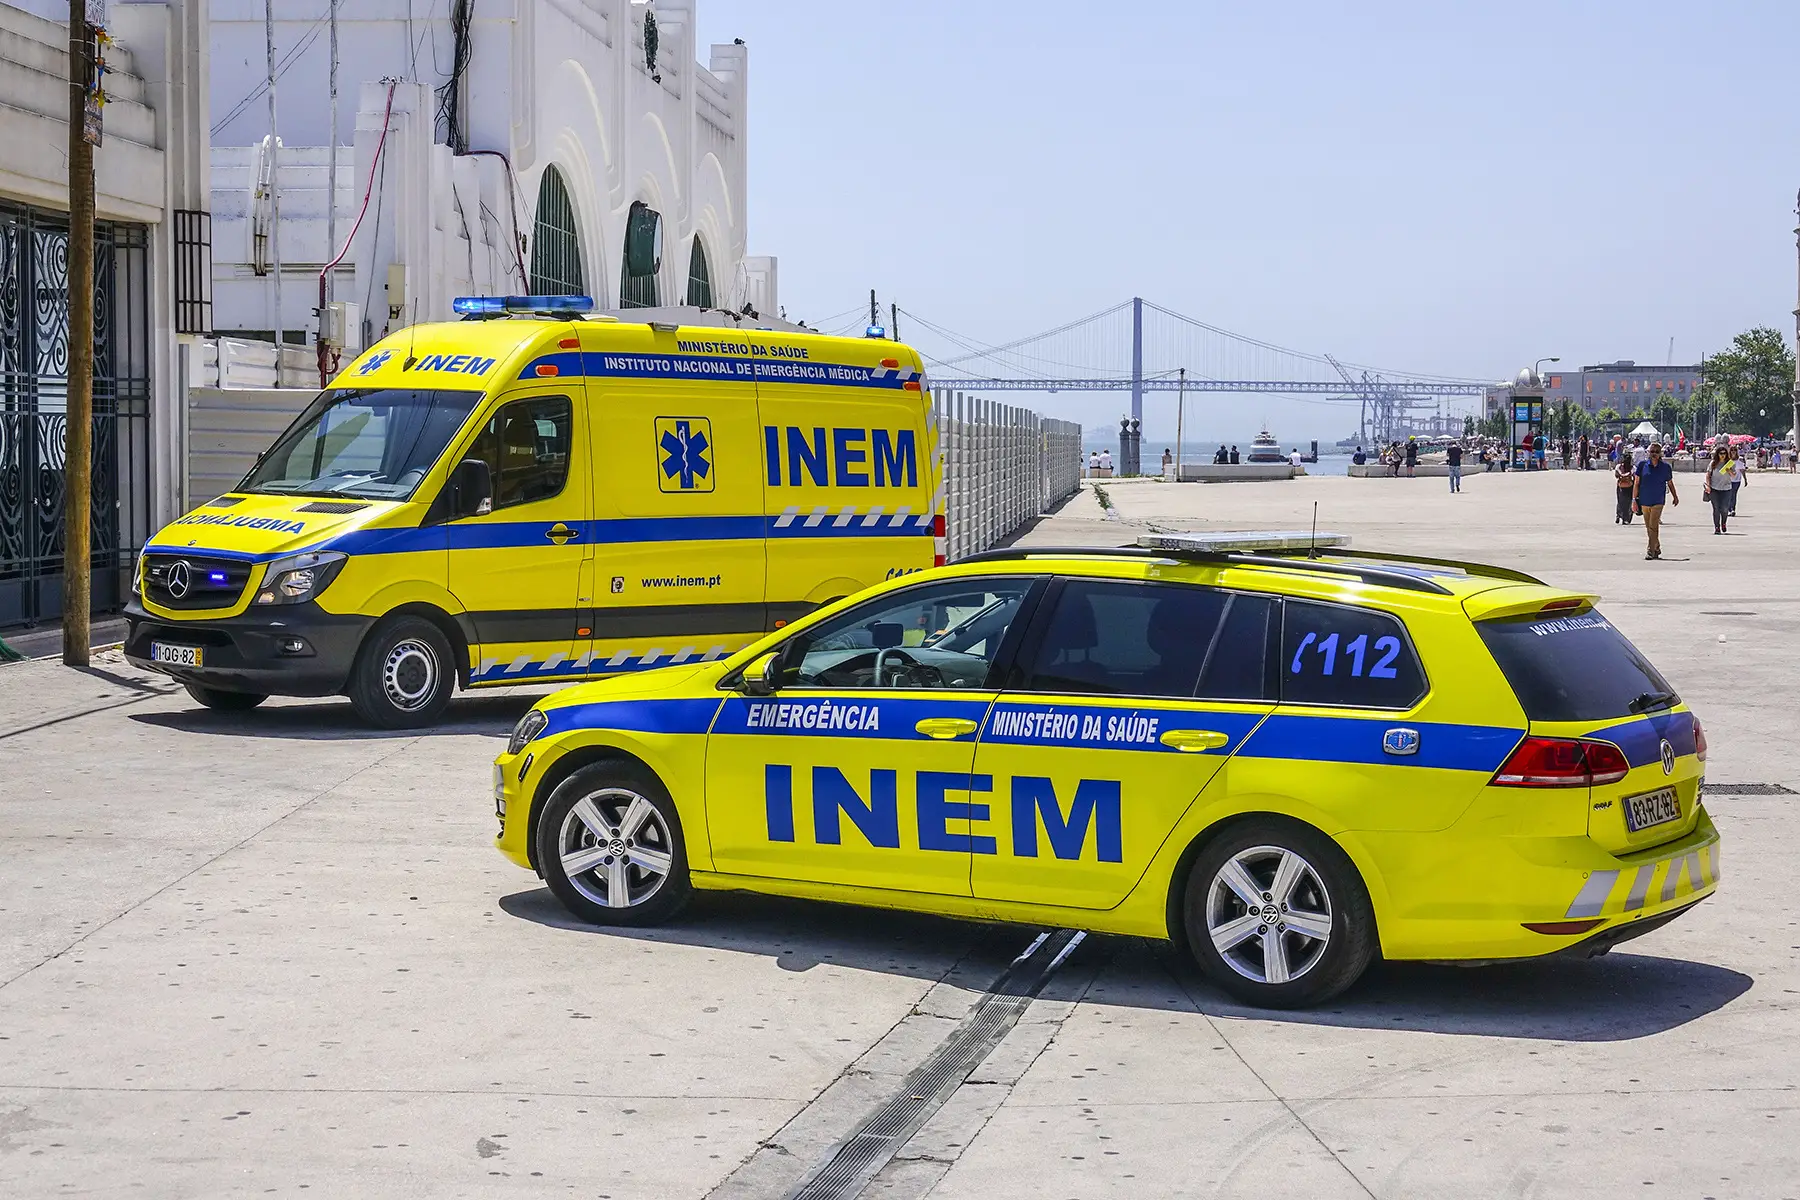 Ambulances in Lisbon